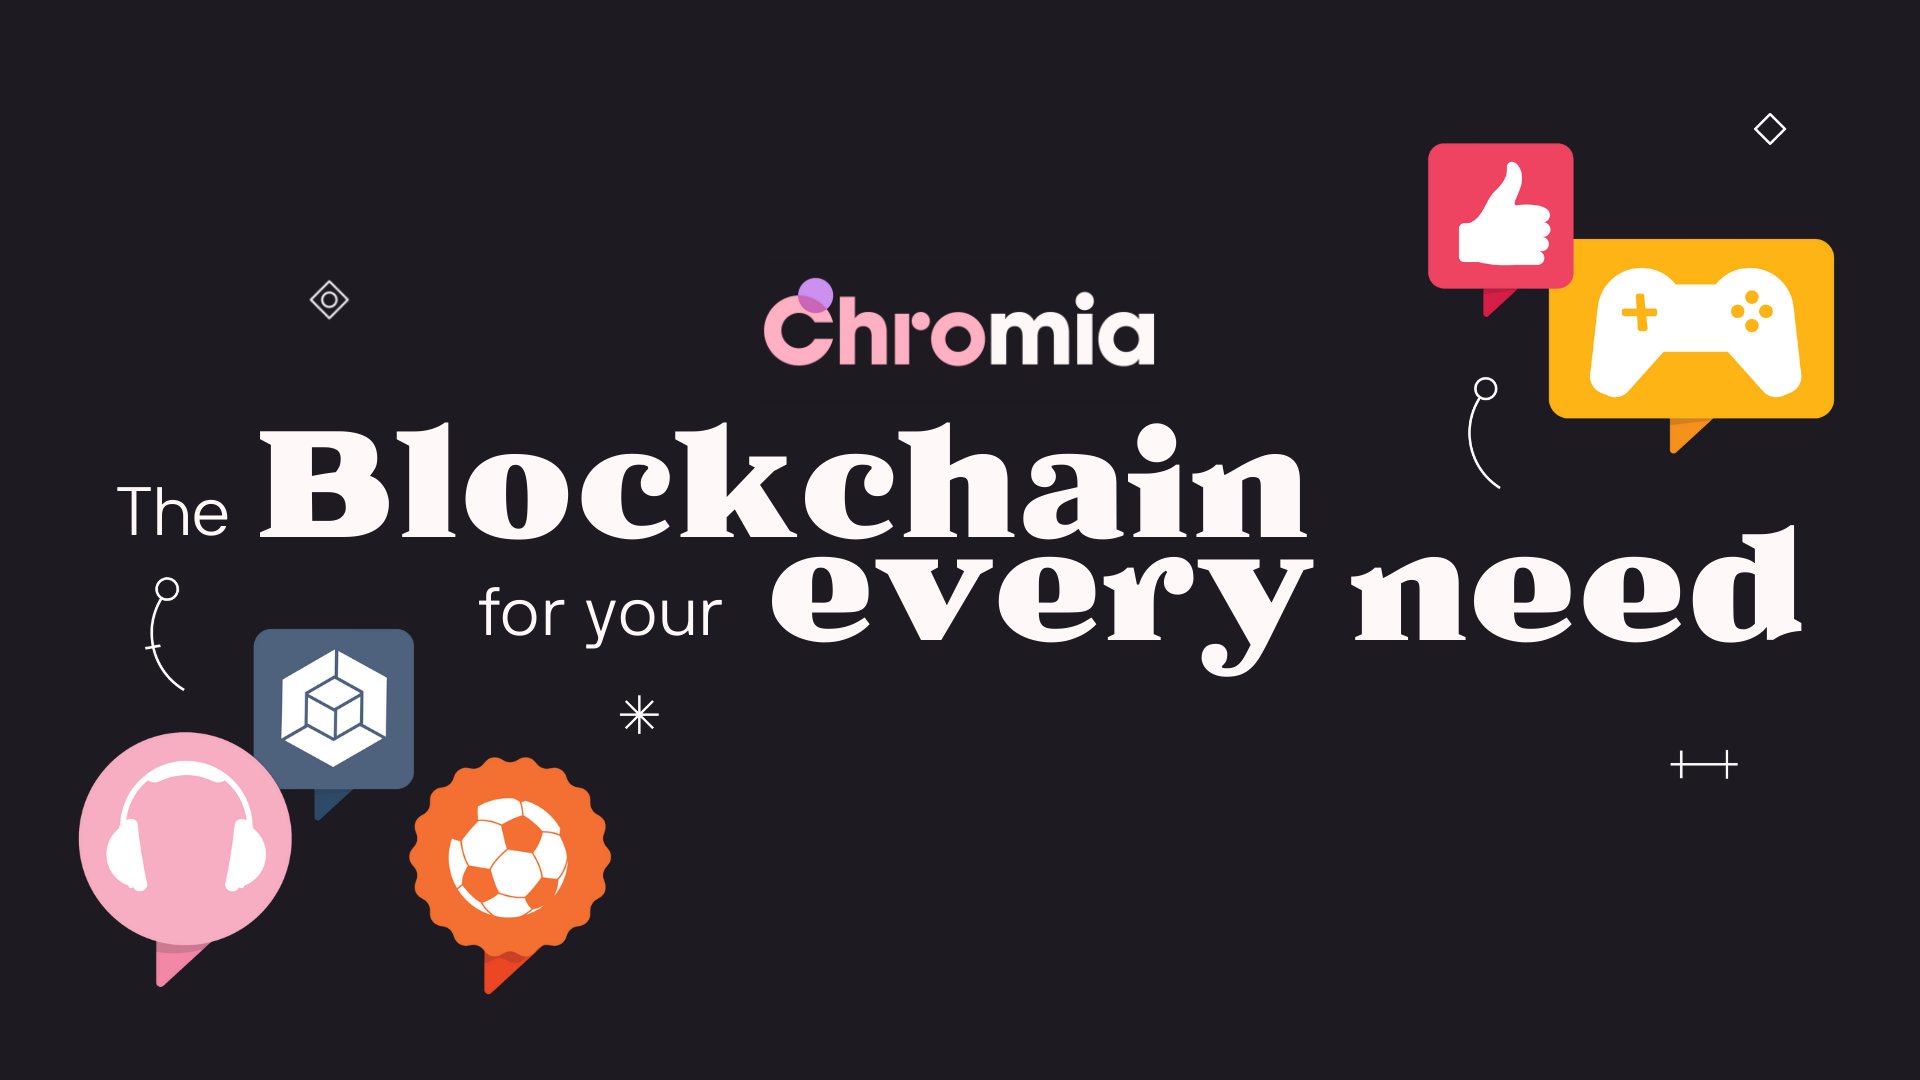 chromia blockchain featured